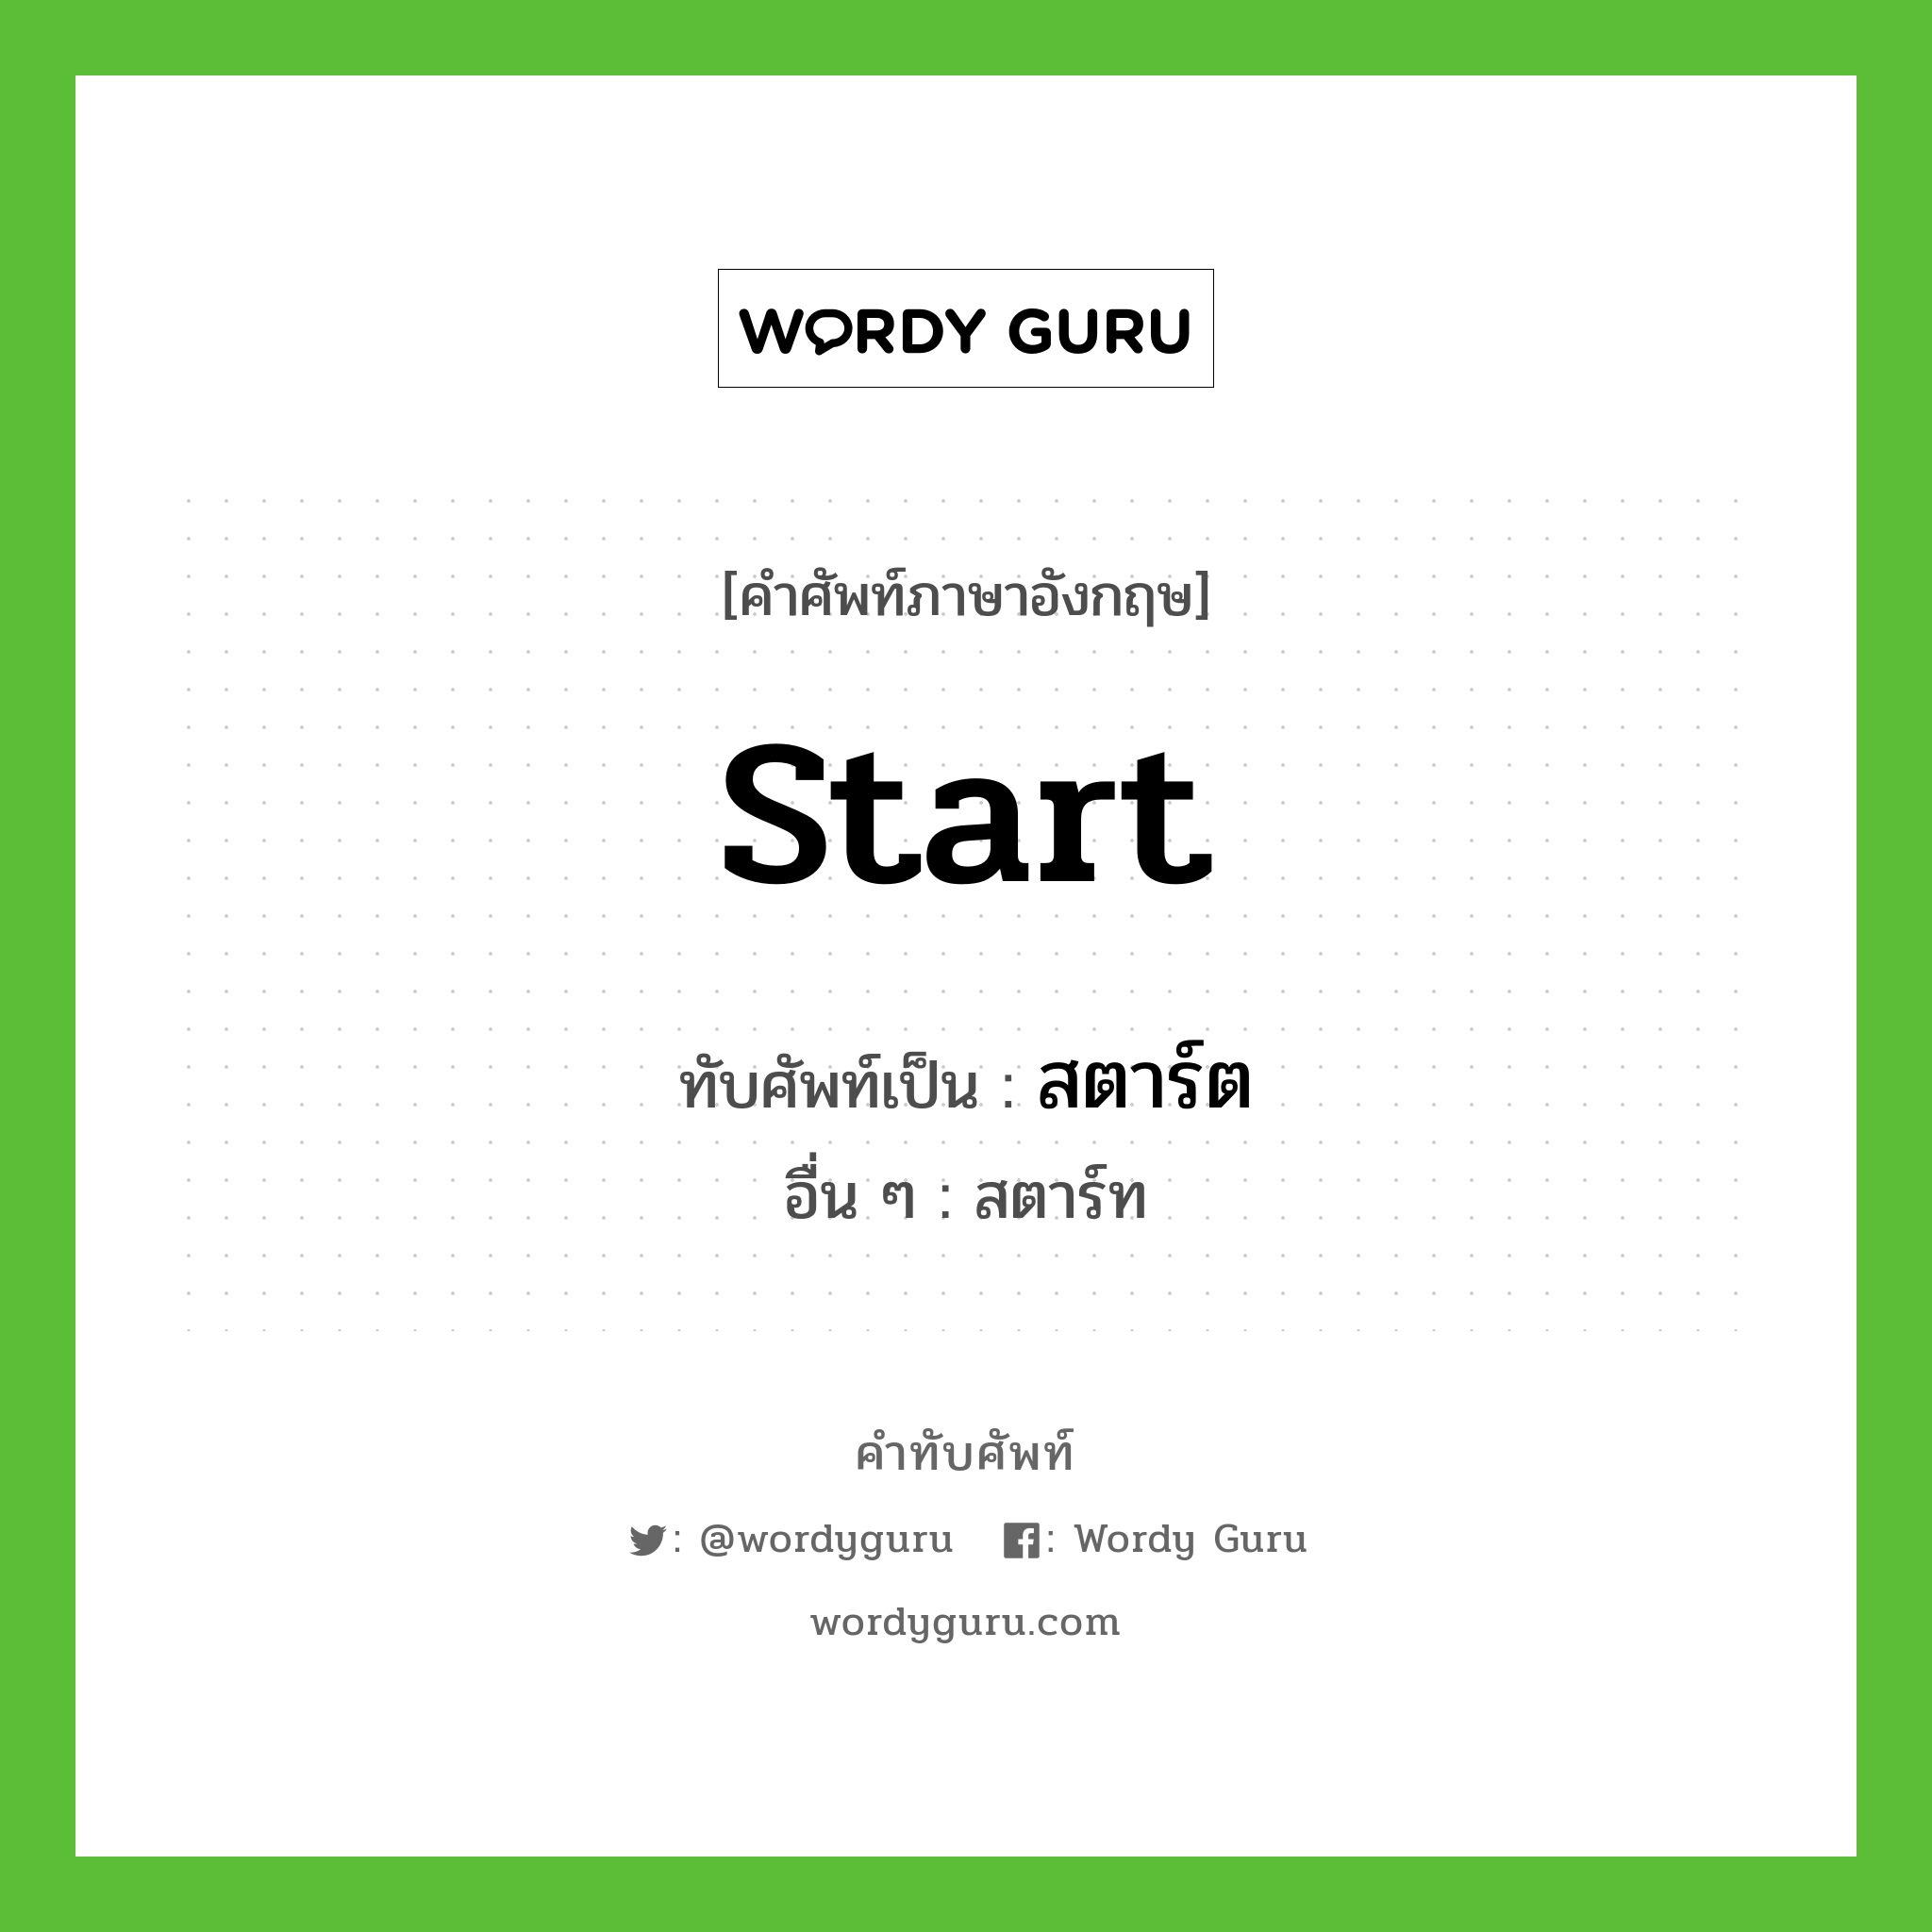 start เขียนเป็นคำไทยว่าอะไร?, คำศัพท์ภาษาอังกฤษ start ทับศัพท์เป็น สตาร์ต อื่น ๆ สตาร์ท